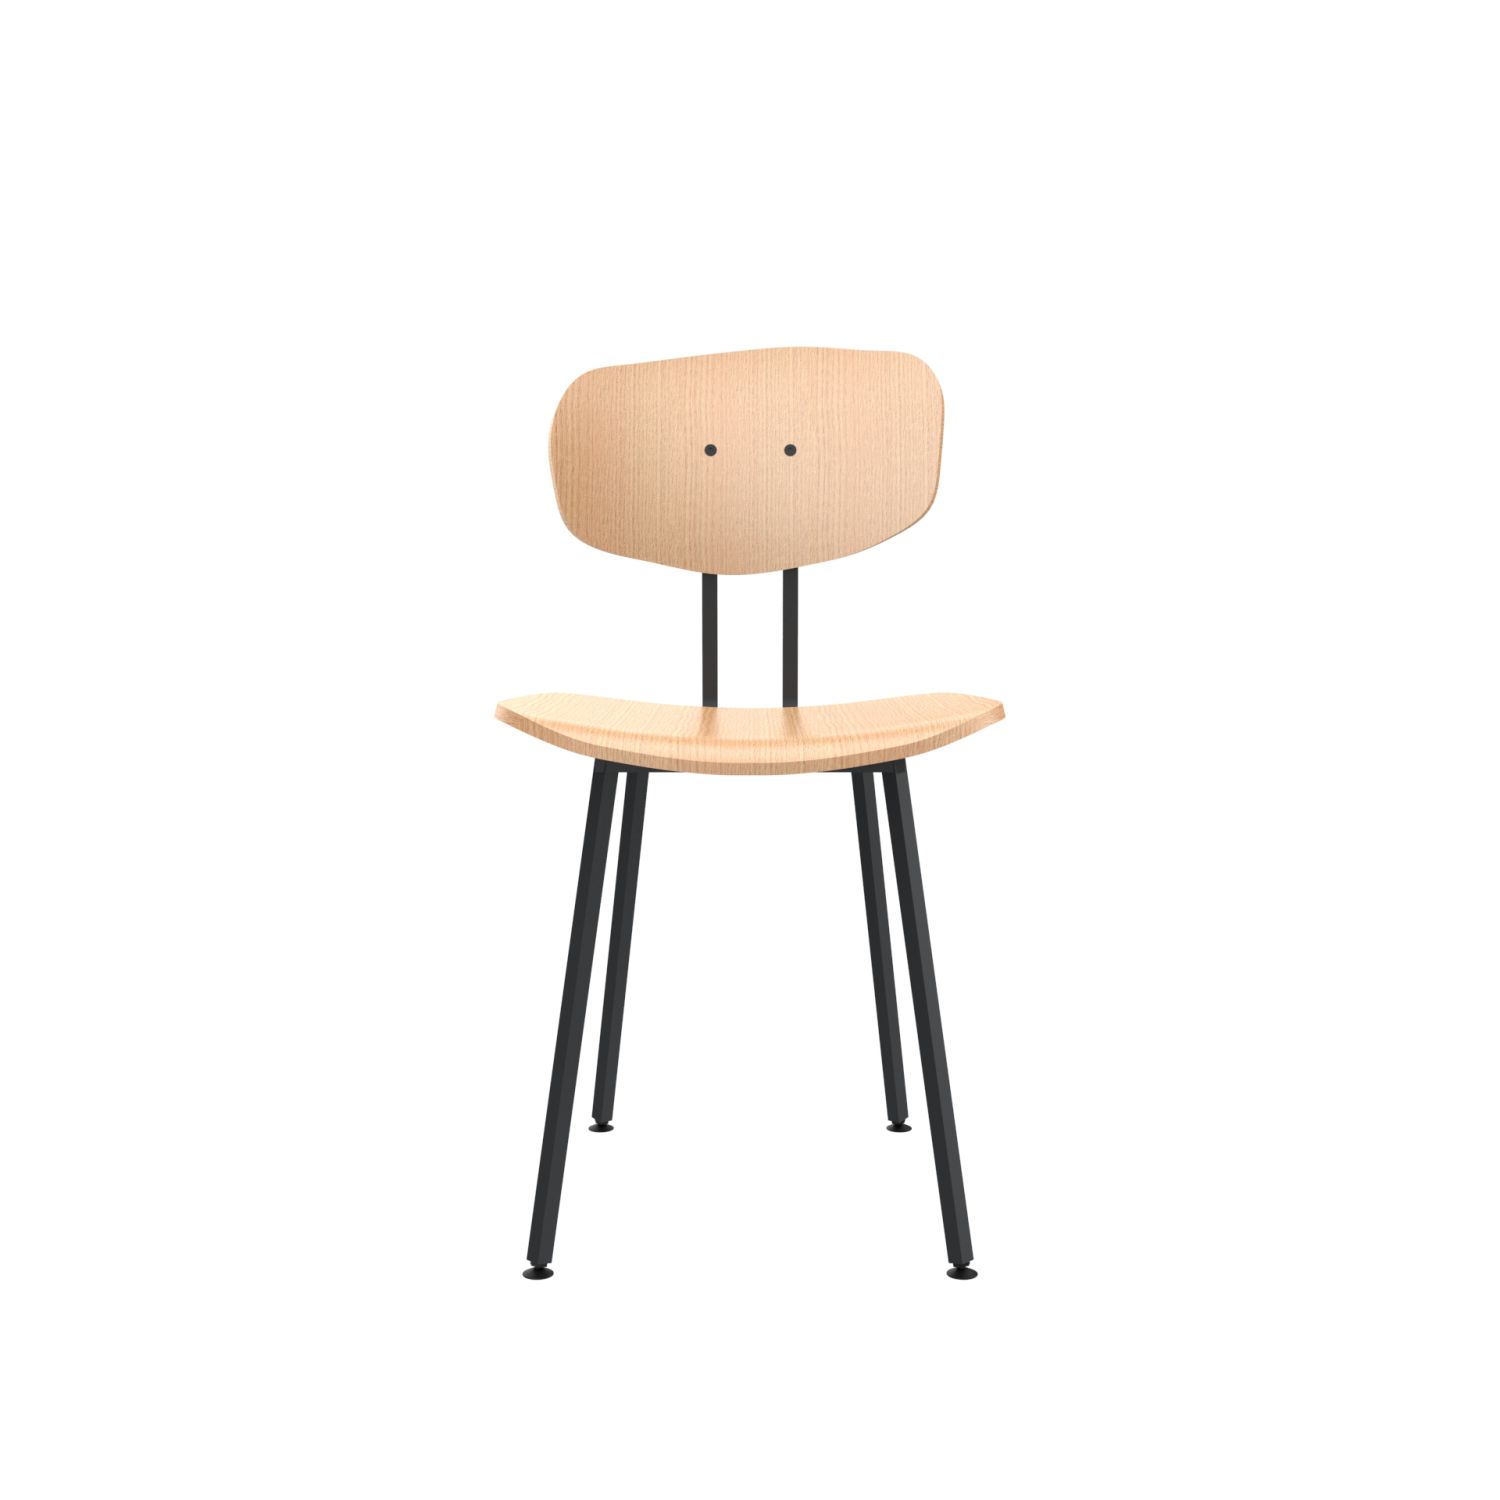 lensvelt maarten baas chair wooden 101 not stackable without armrests backrest c european oak natural black ral9005 hard leg ends